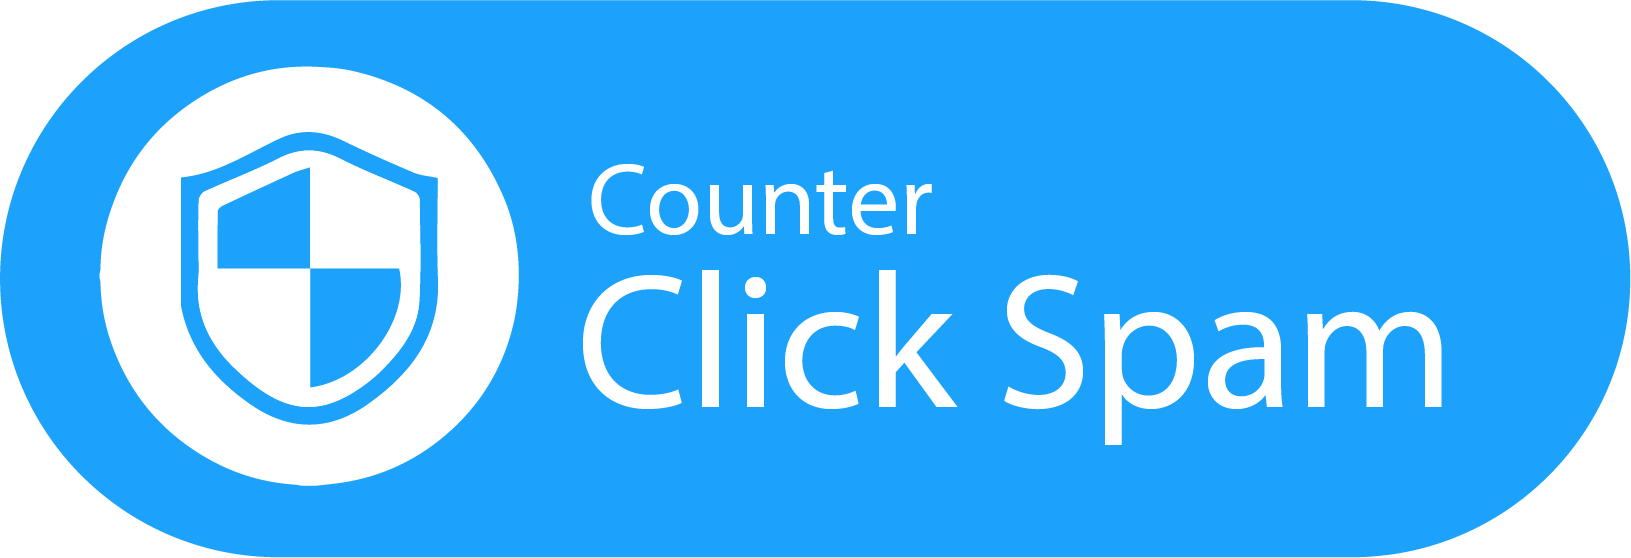 Counter Click Spam